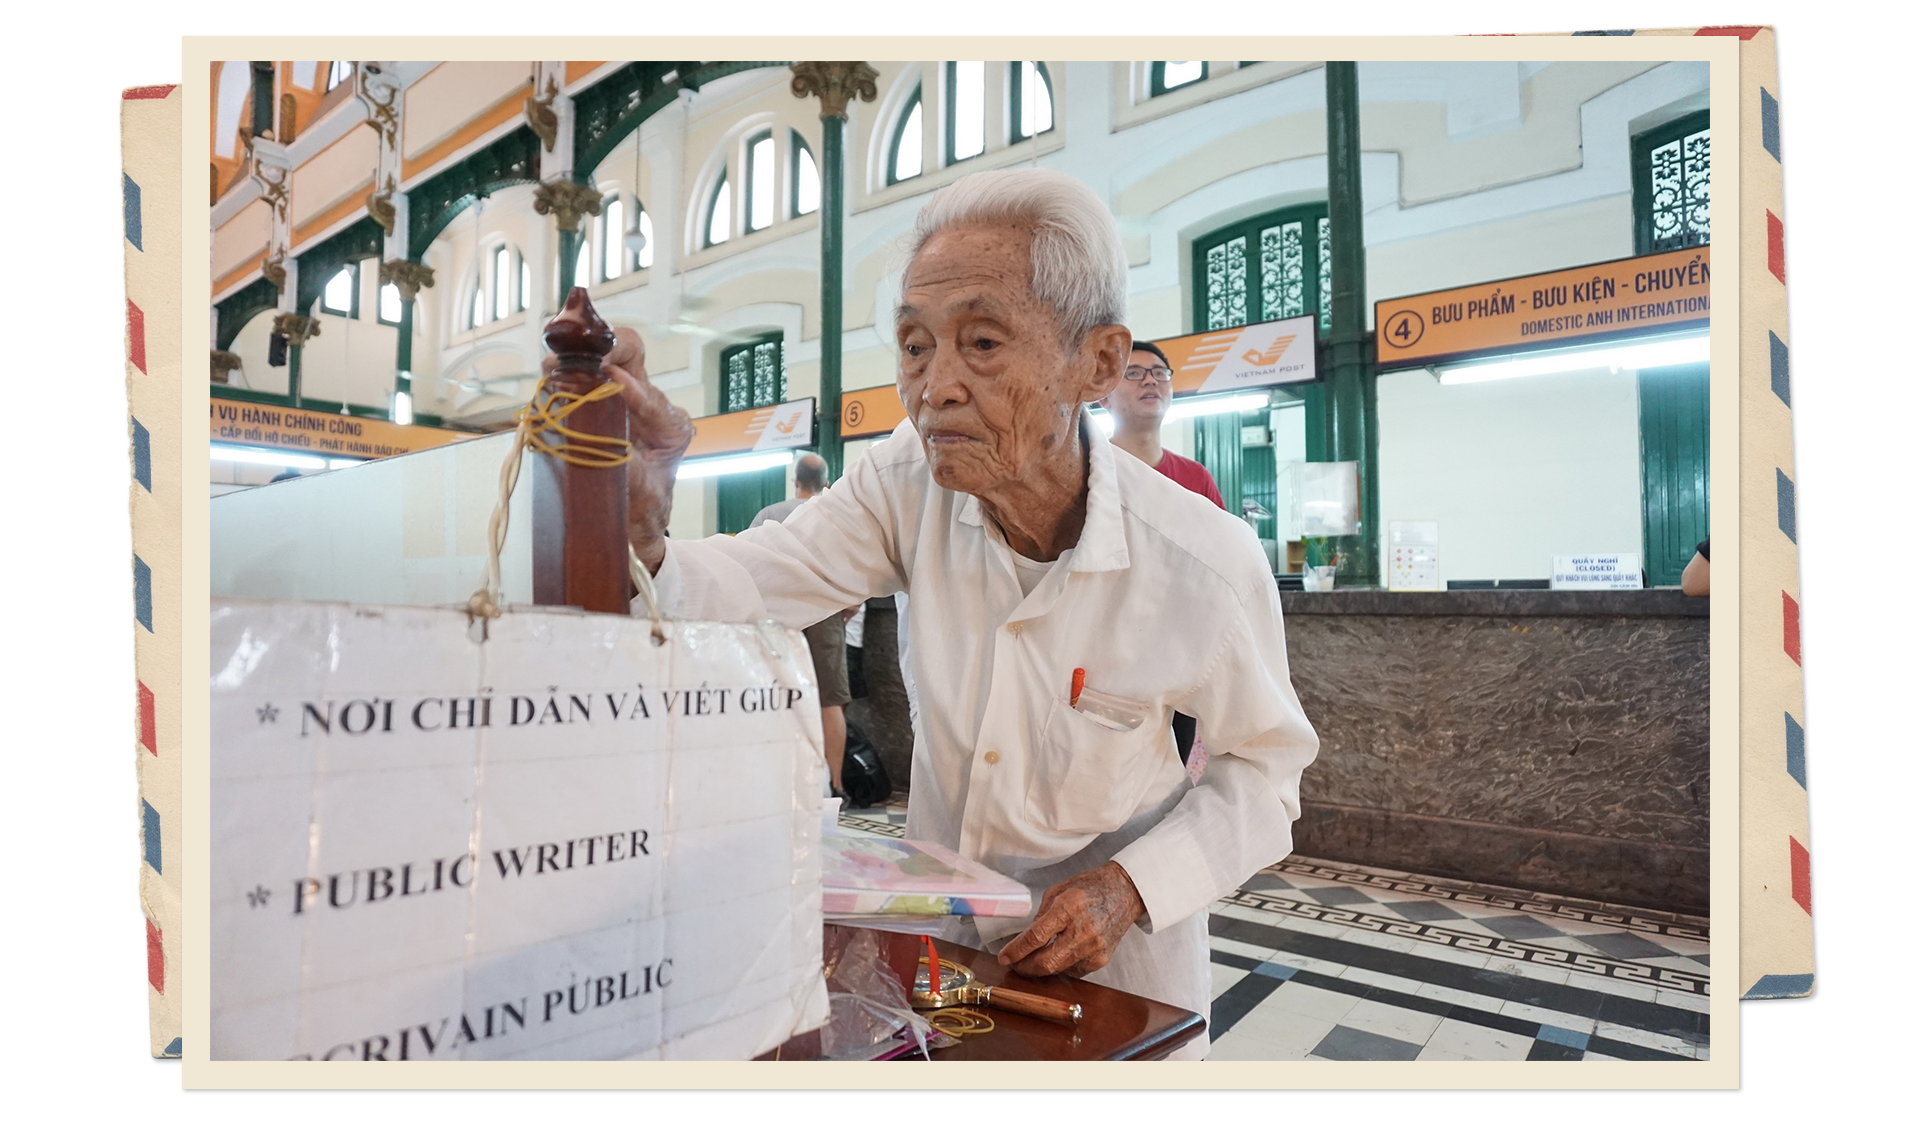 Saigon’s last public writer still active at age 89